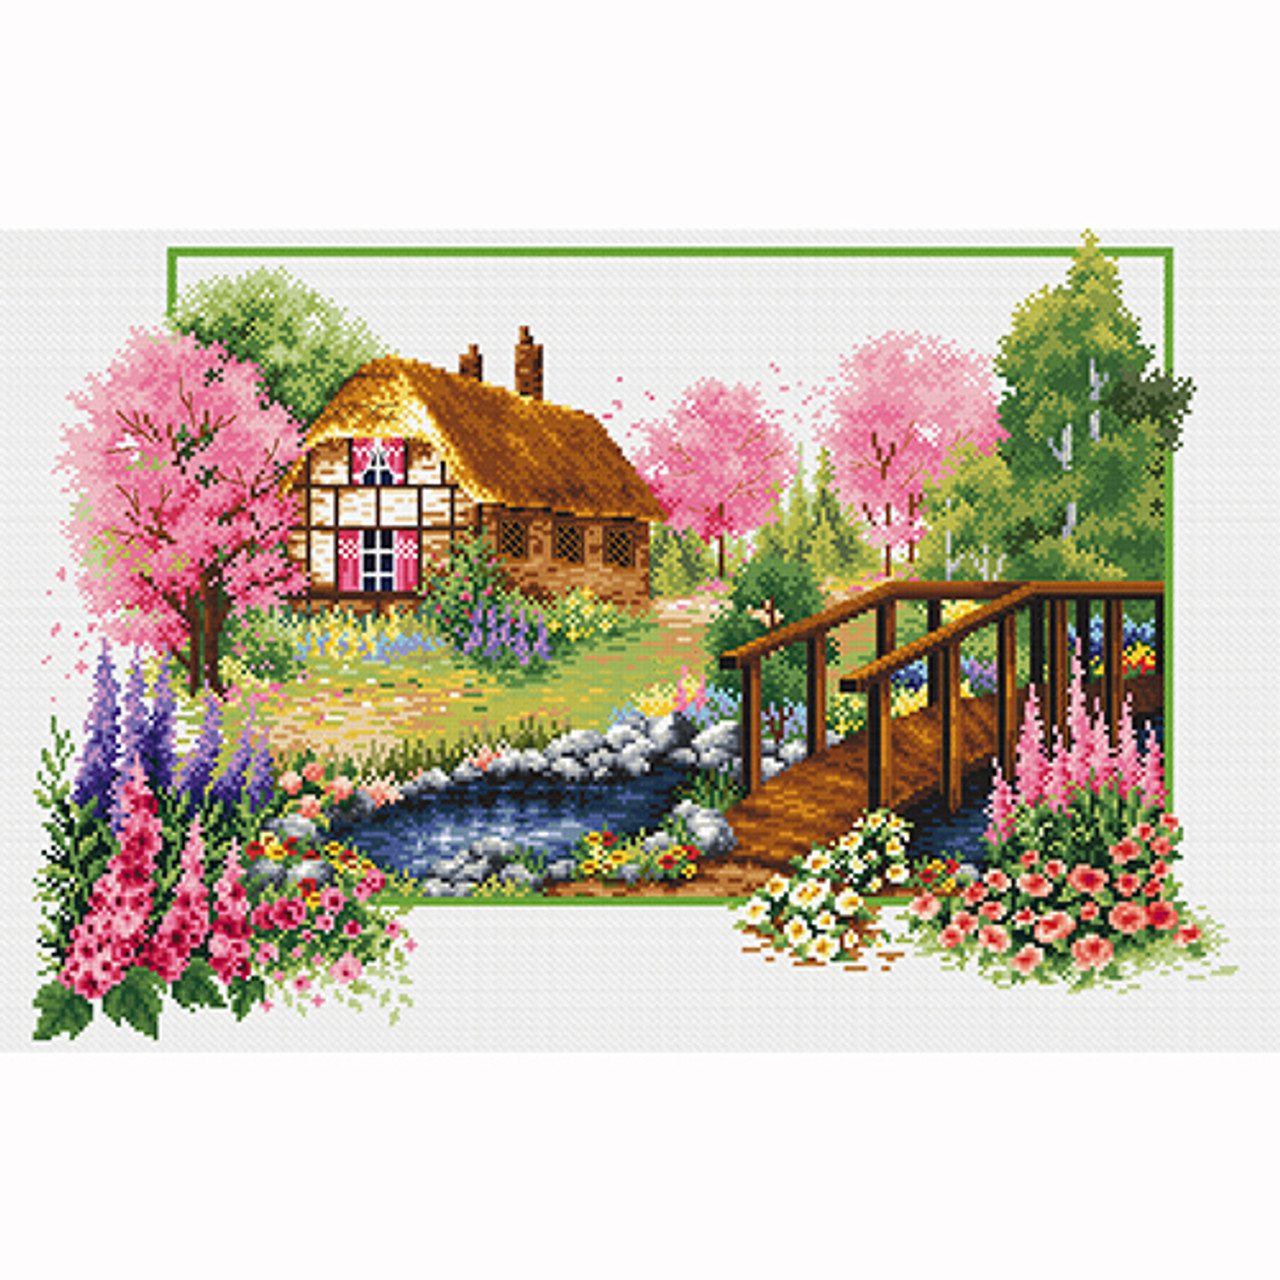 No Count Cross-stitch Kit: Spring Cottage 47cm x 32cm 14Aida